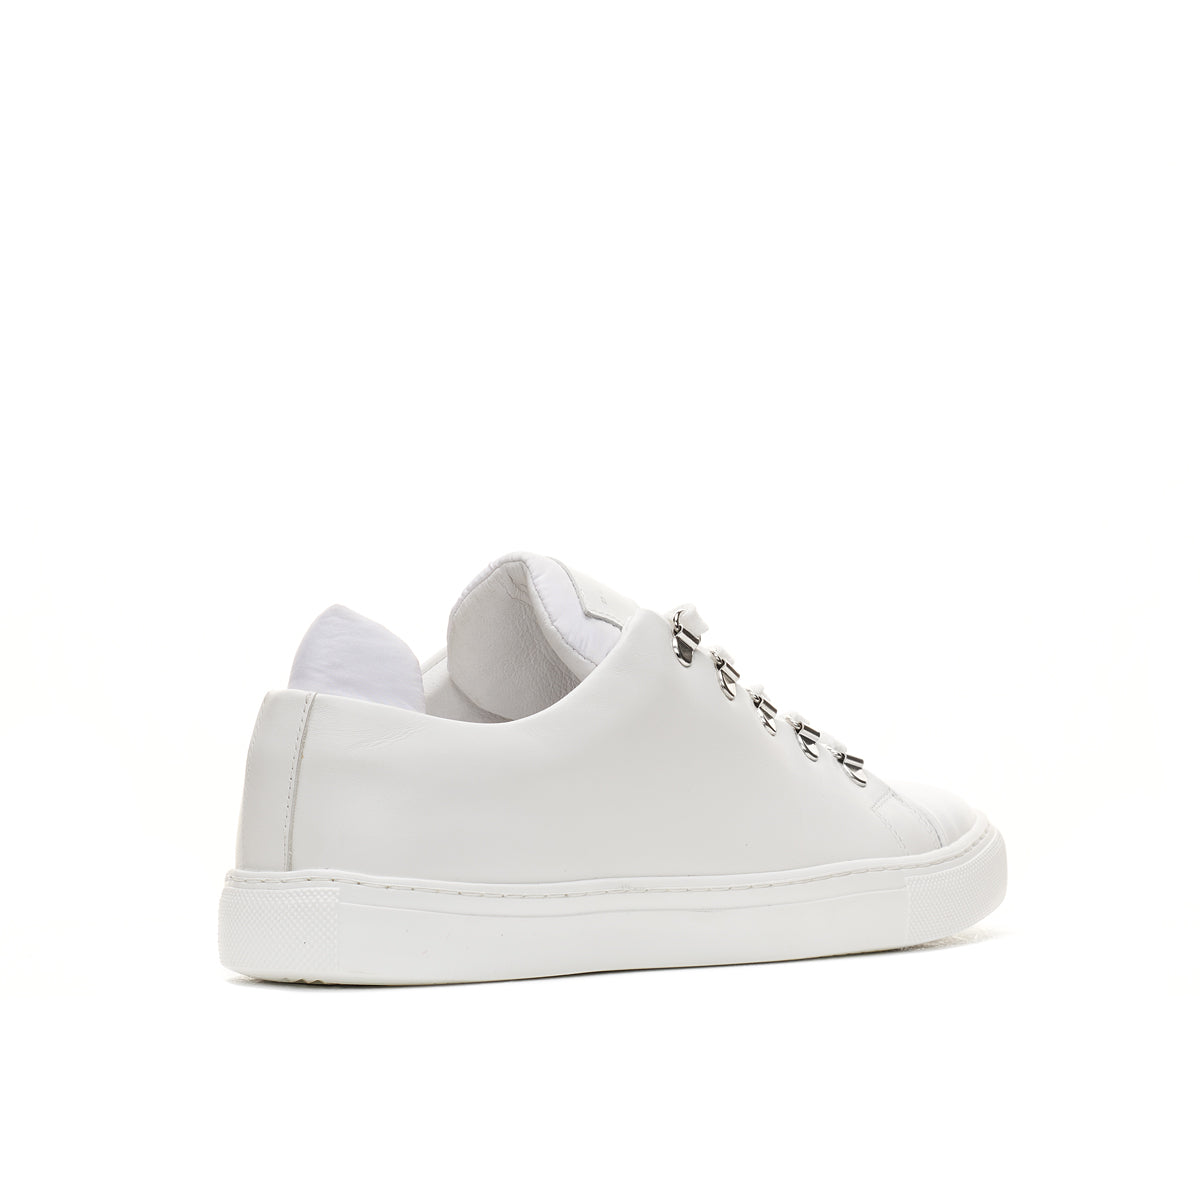 Avila - White (Casual/Lifestyle Shoe)